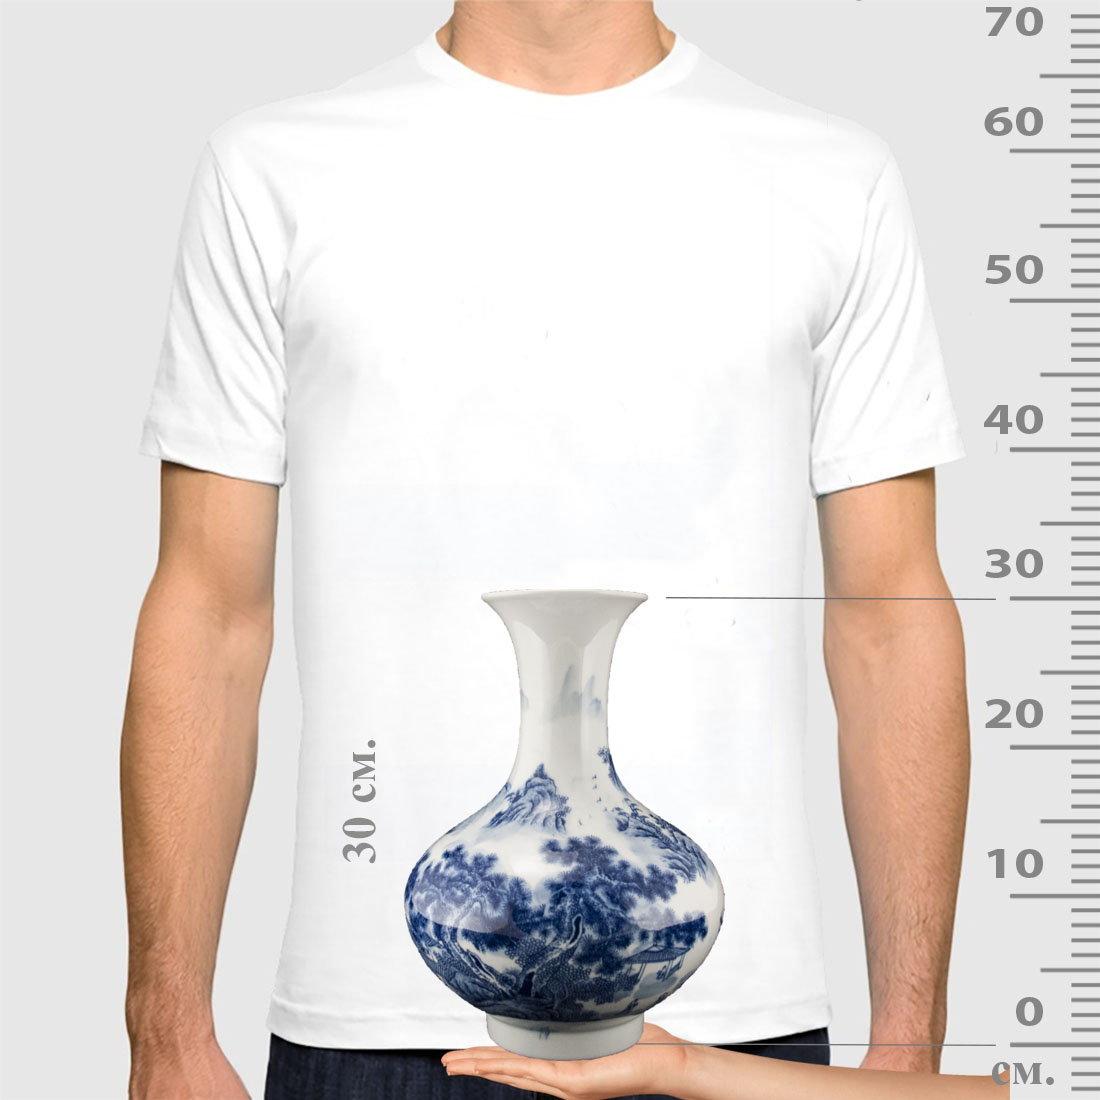 Китайская ваза "Blue & White" в интернет-студии декора / шоурум | ChinaHouse.studio